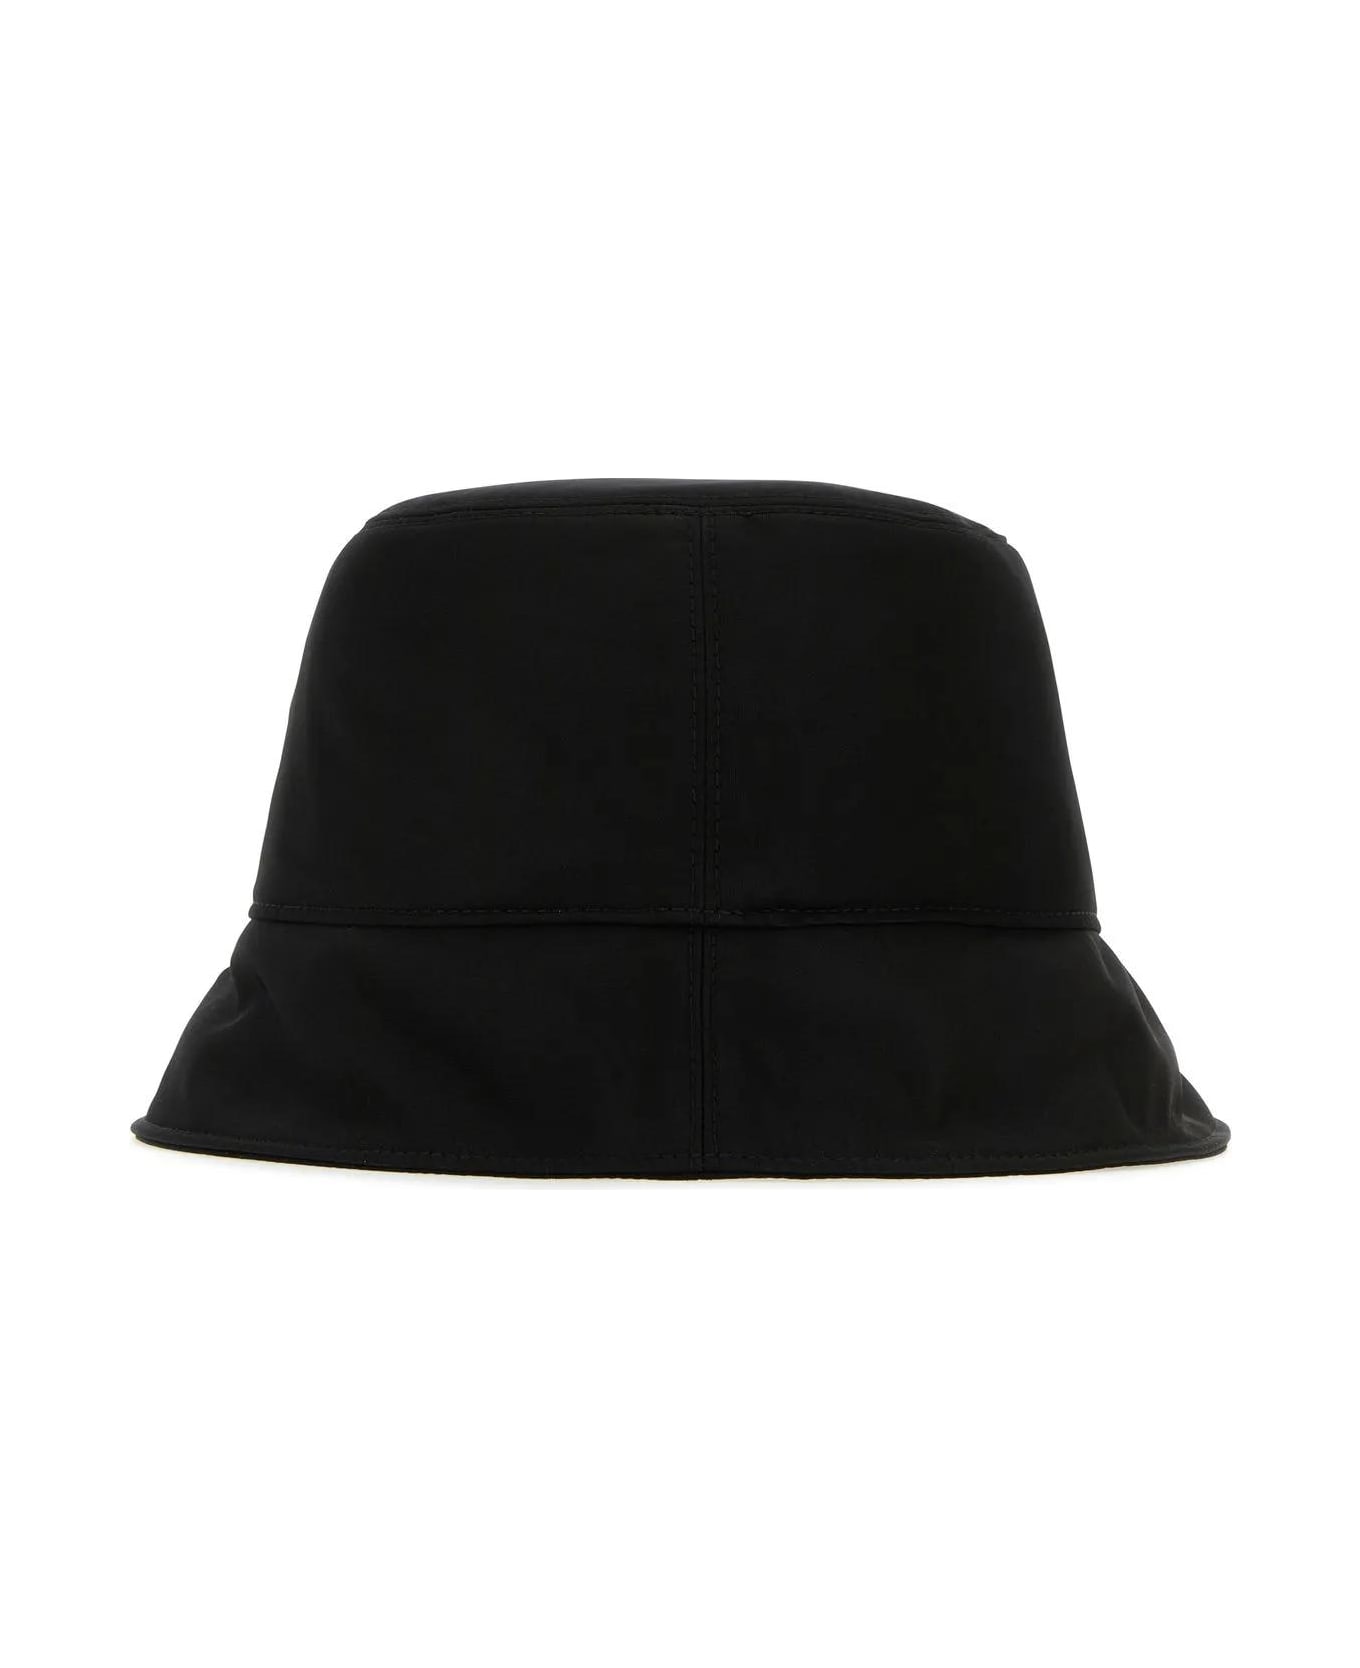 Off-White Bucket Hat - White/Black 帽子